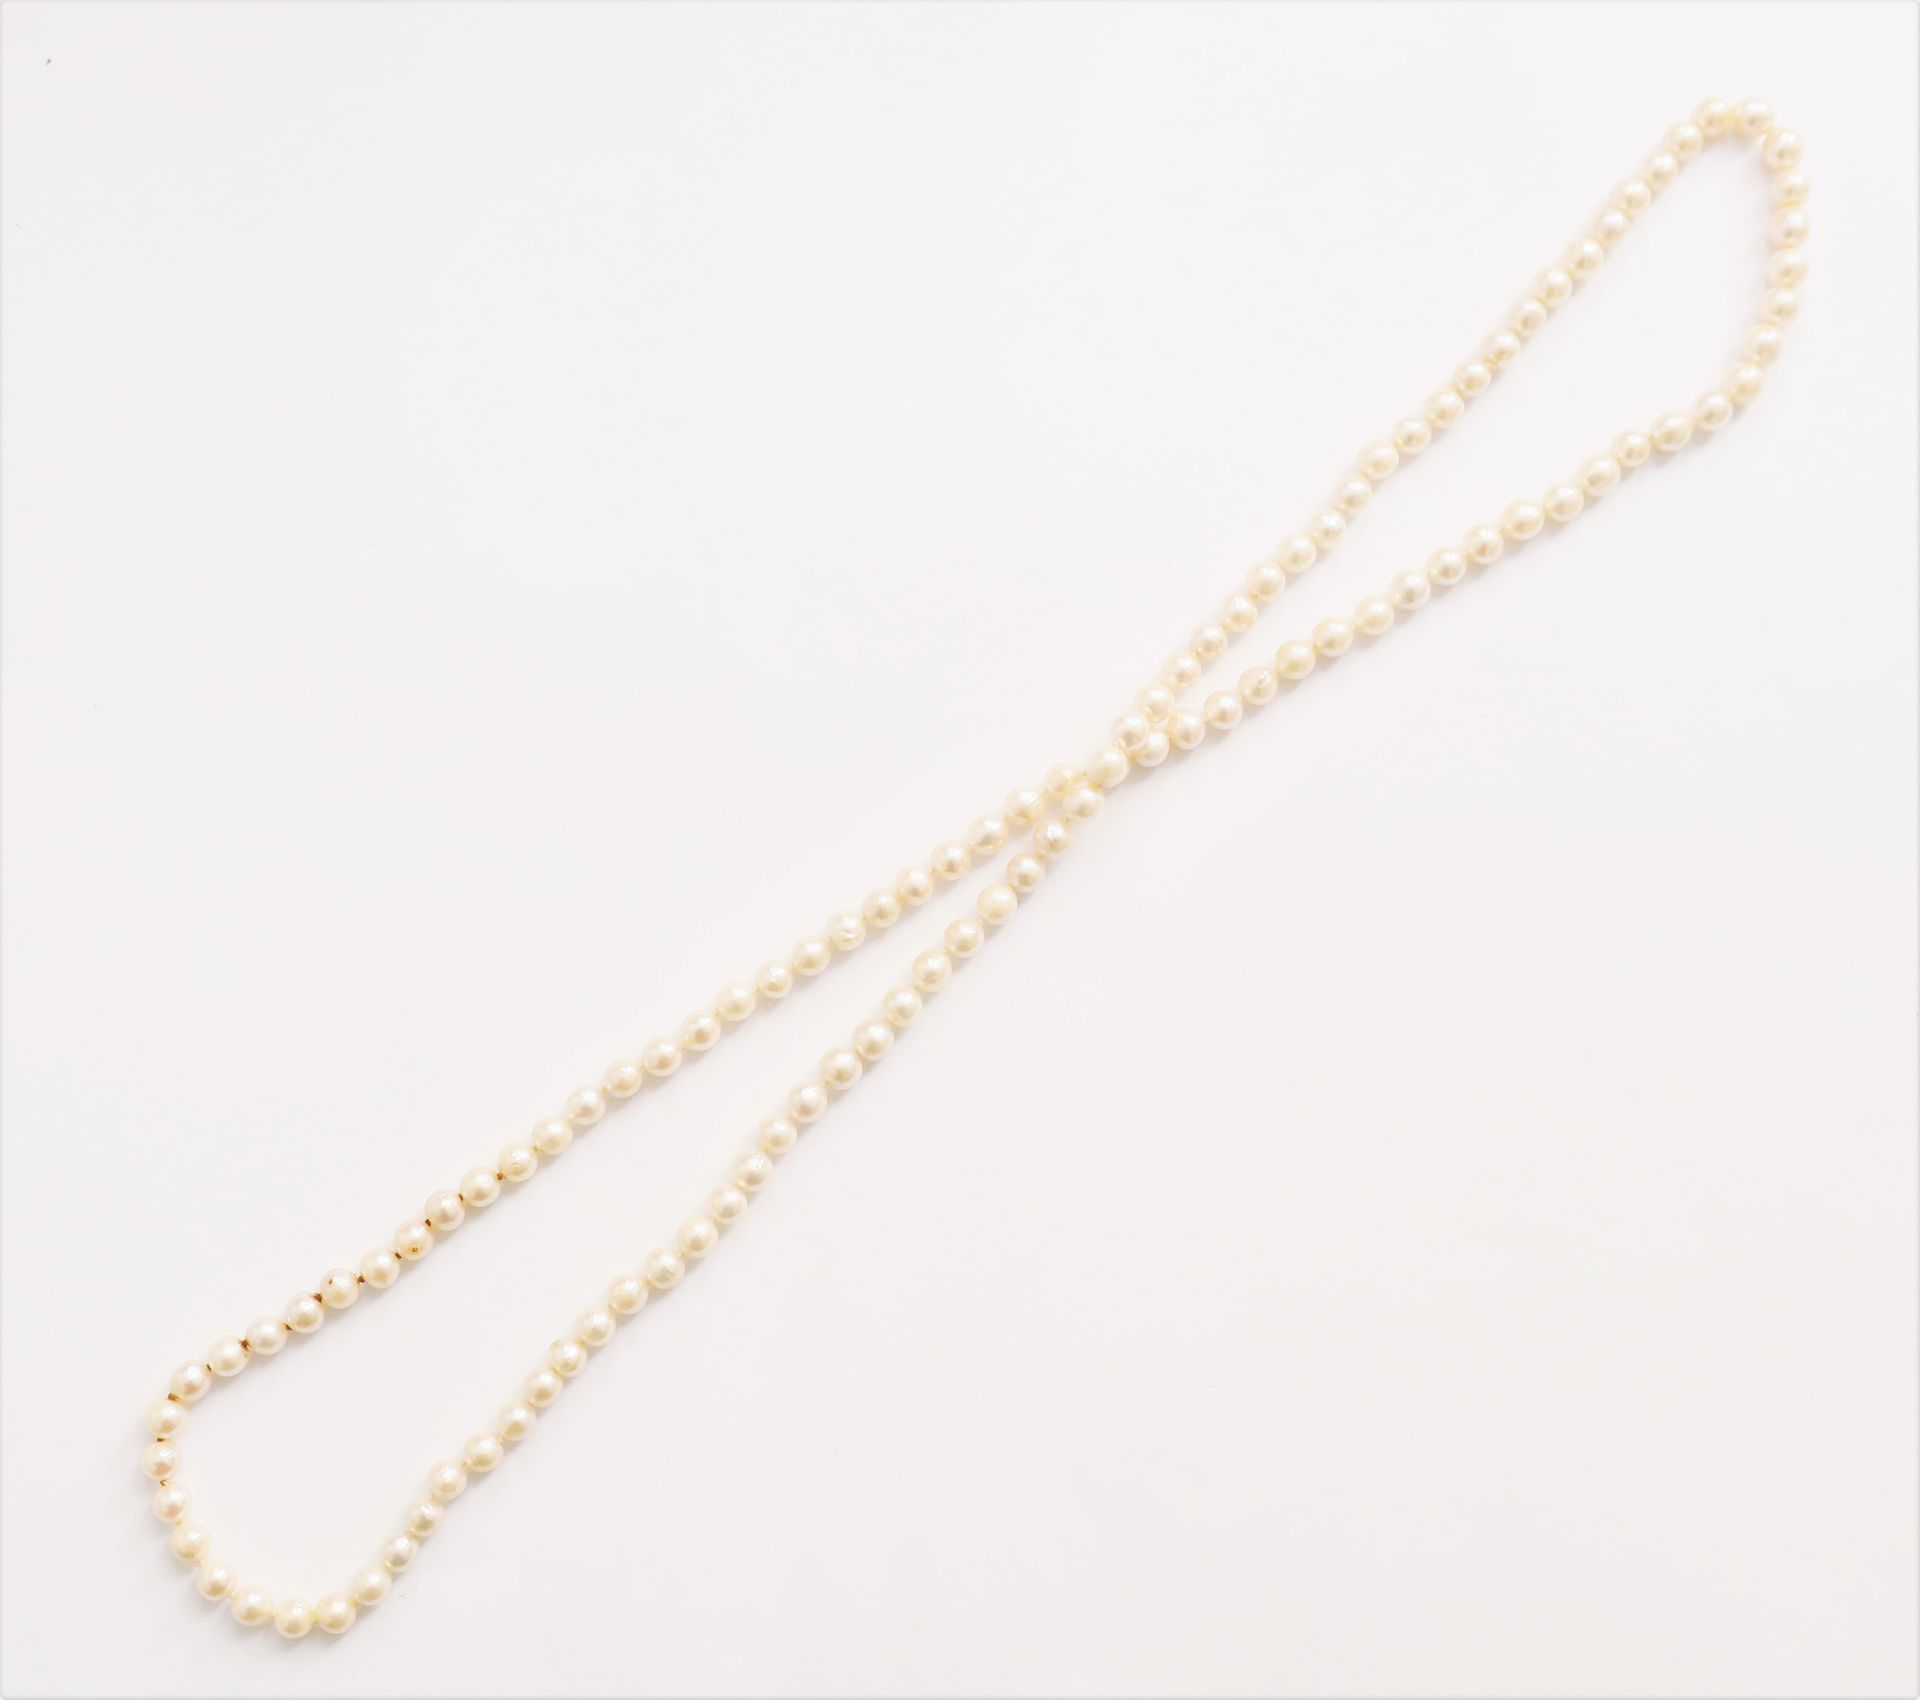 Null Sautoir en perles de culture baroques. Longueur : 82 cm environ